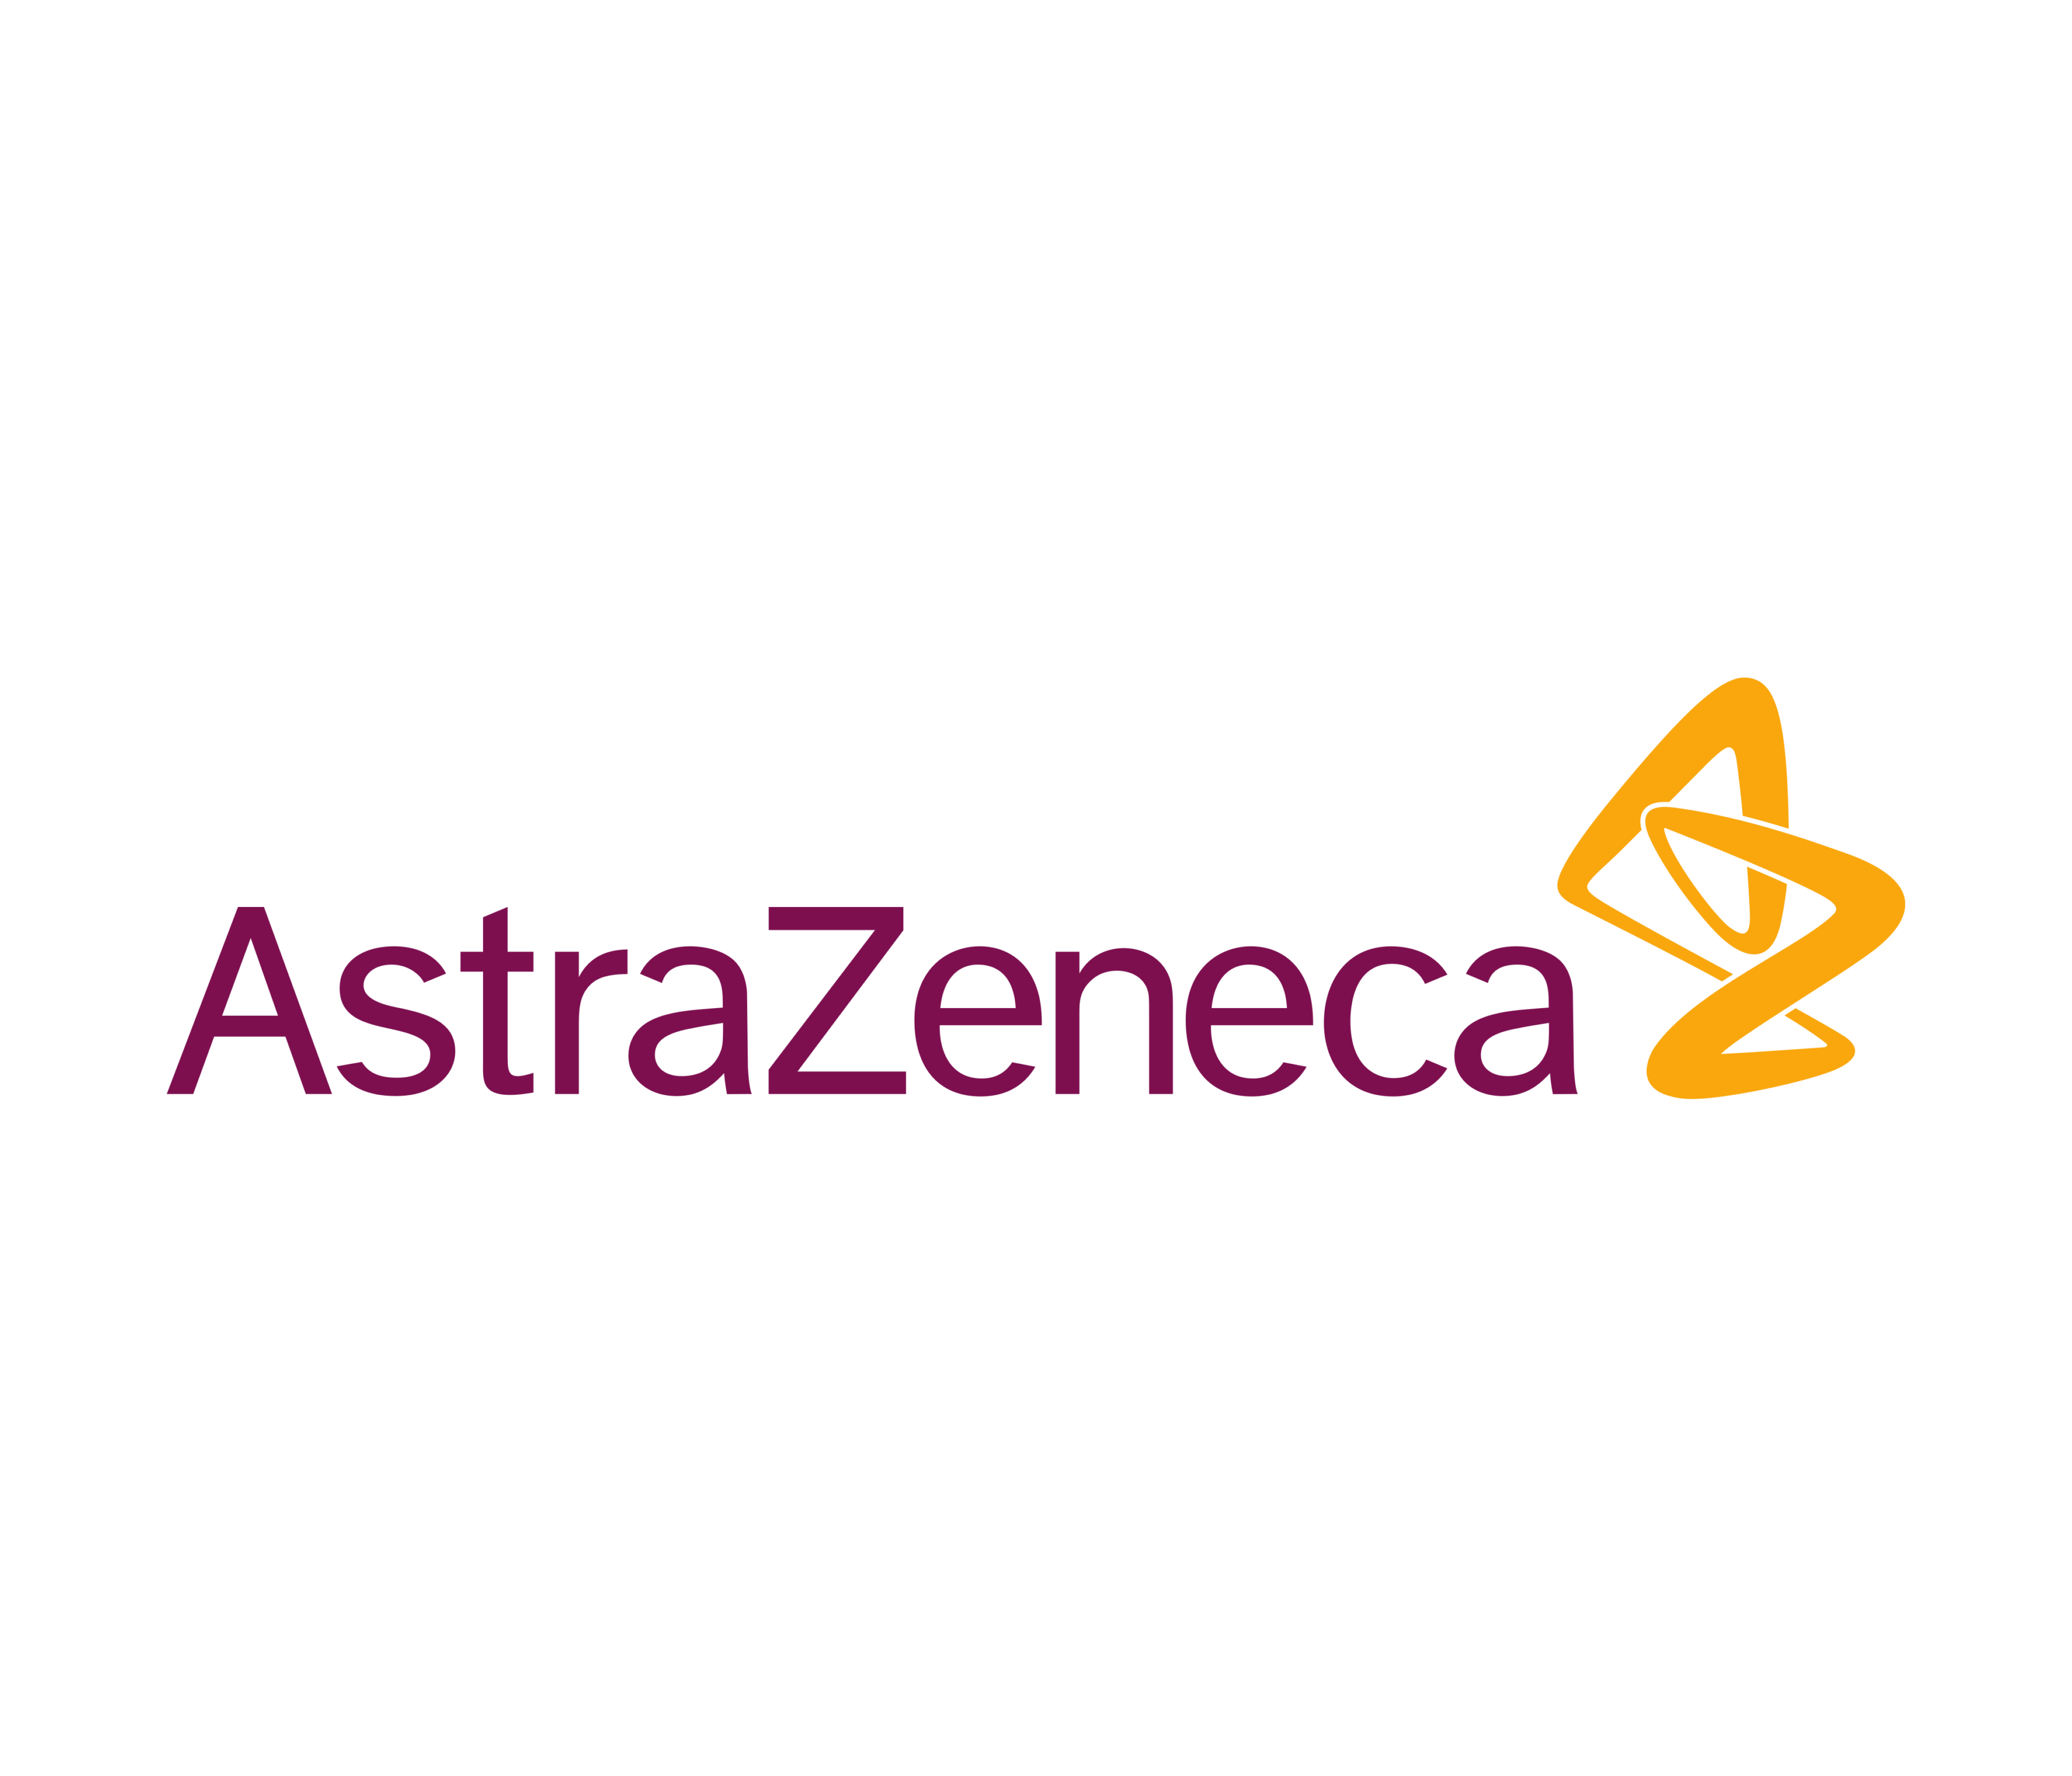 astrazeneca-logo-0